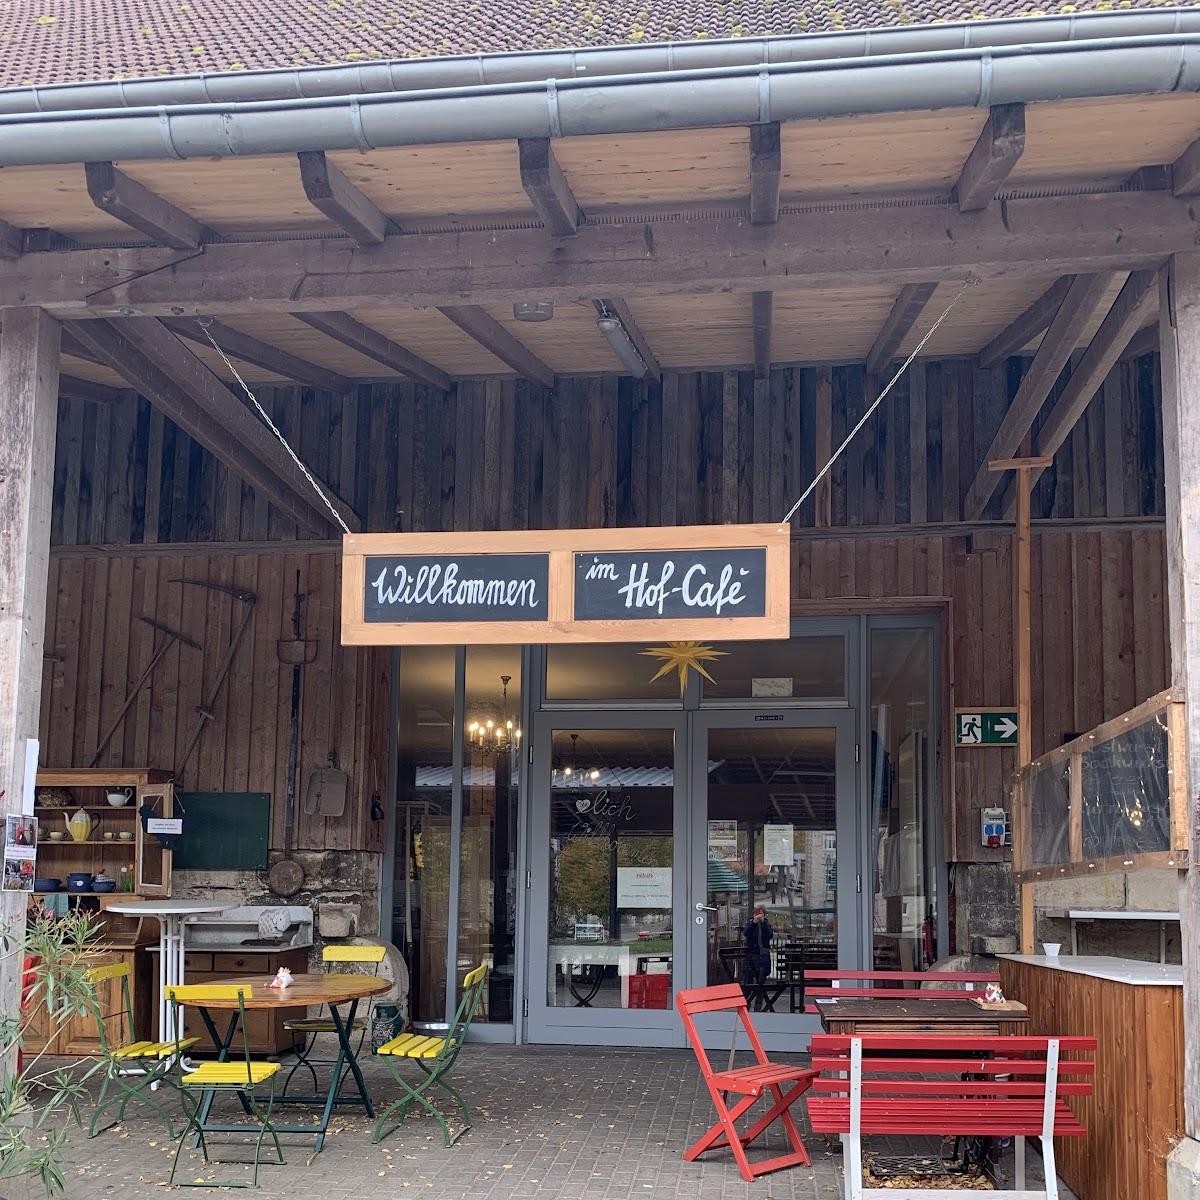 Restaurant "Hofcafe" in Körner